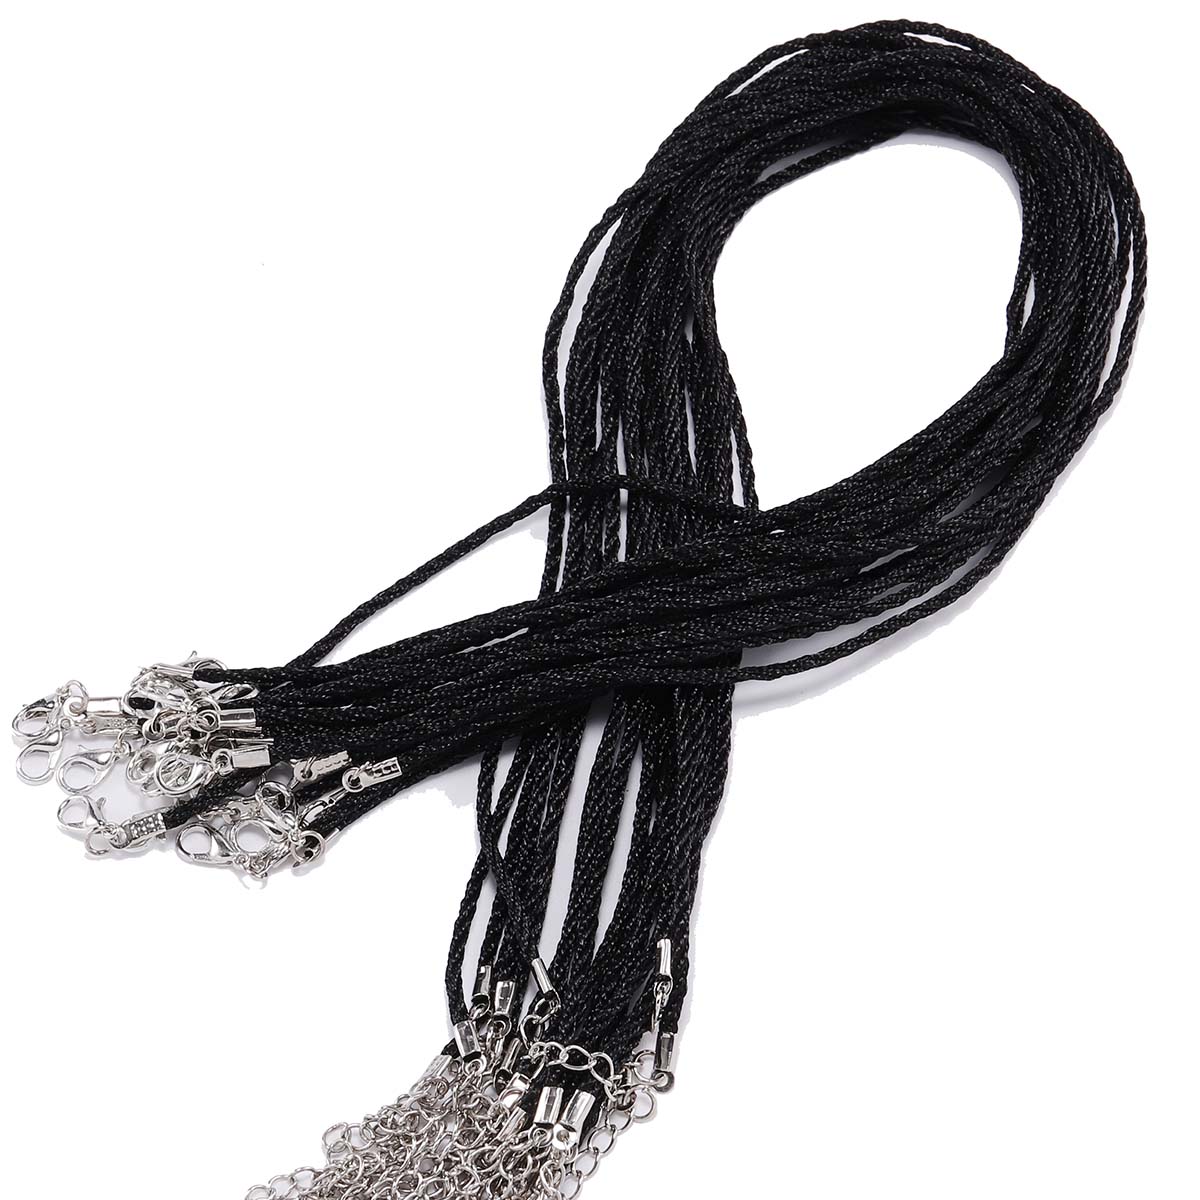 1.8mm Adjustable Braided Rope, High-Quality Nylon cord, 10pcs